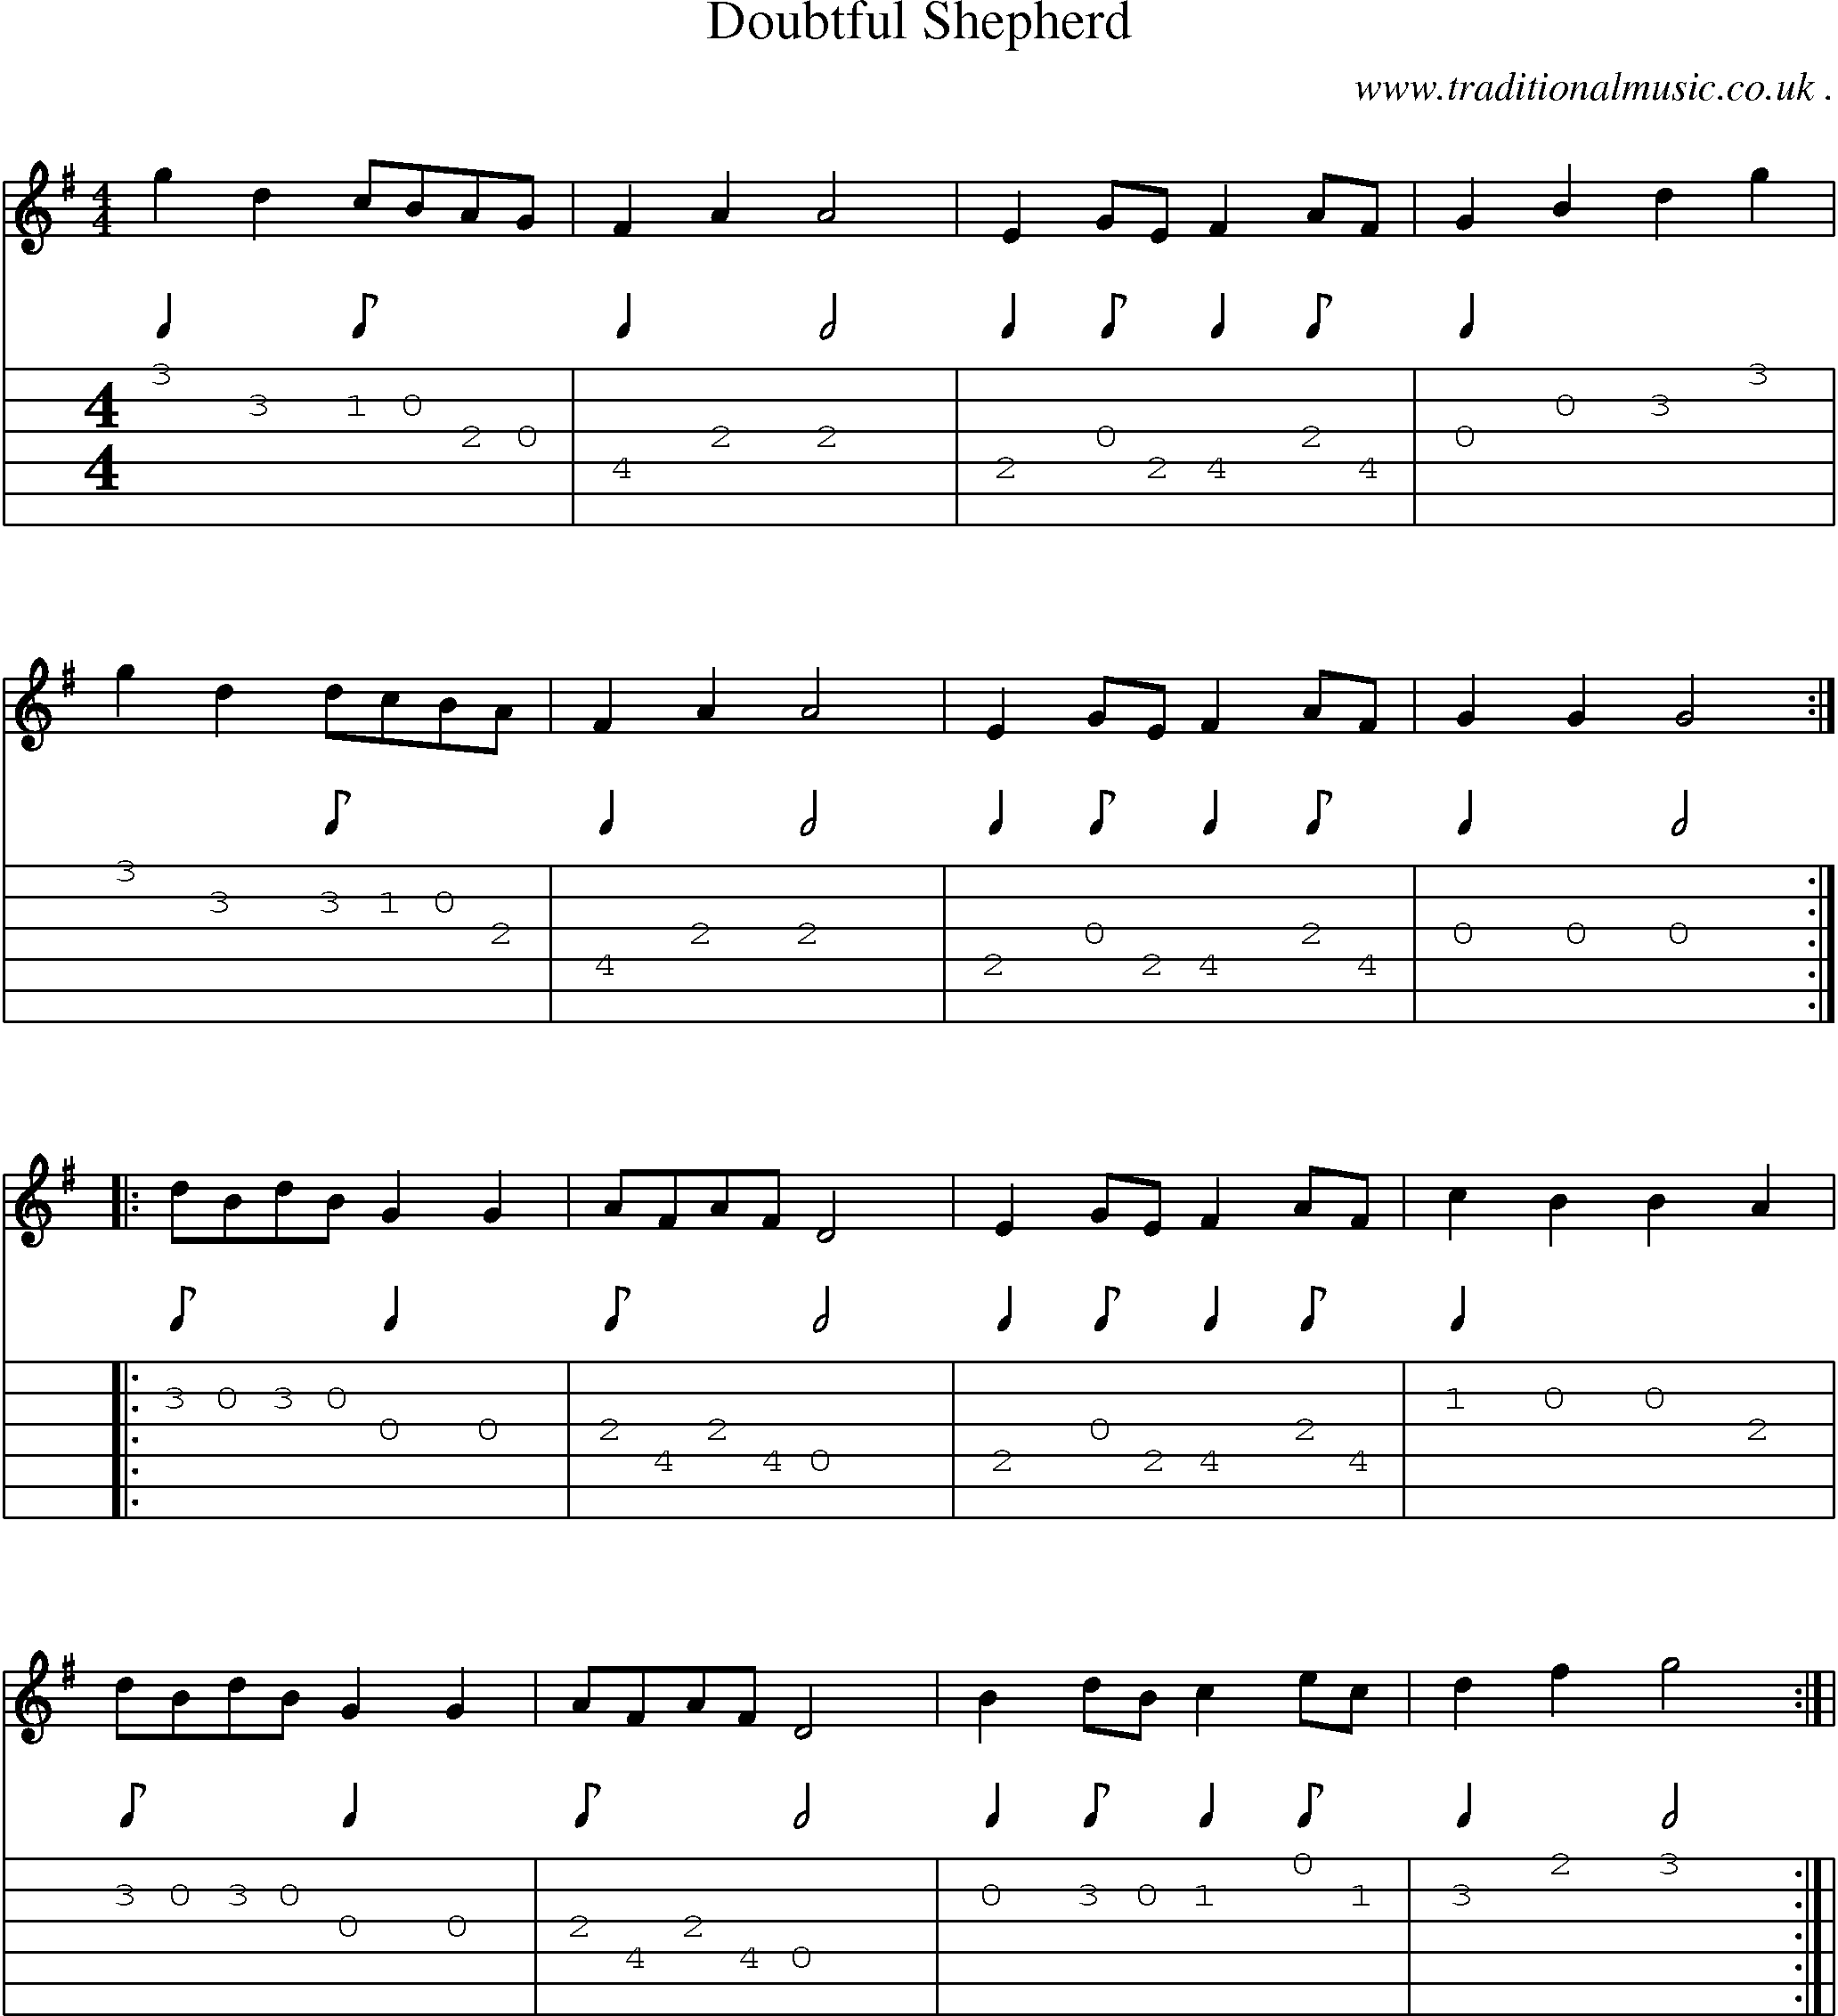 Sheet-Music and Guitar Tabs for Doubtful Shepherd